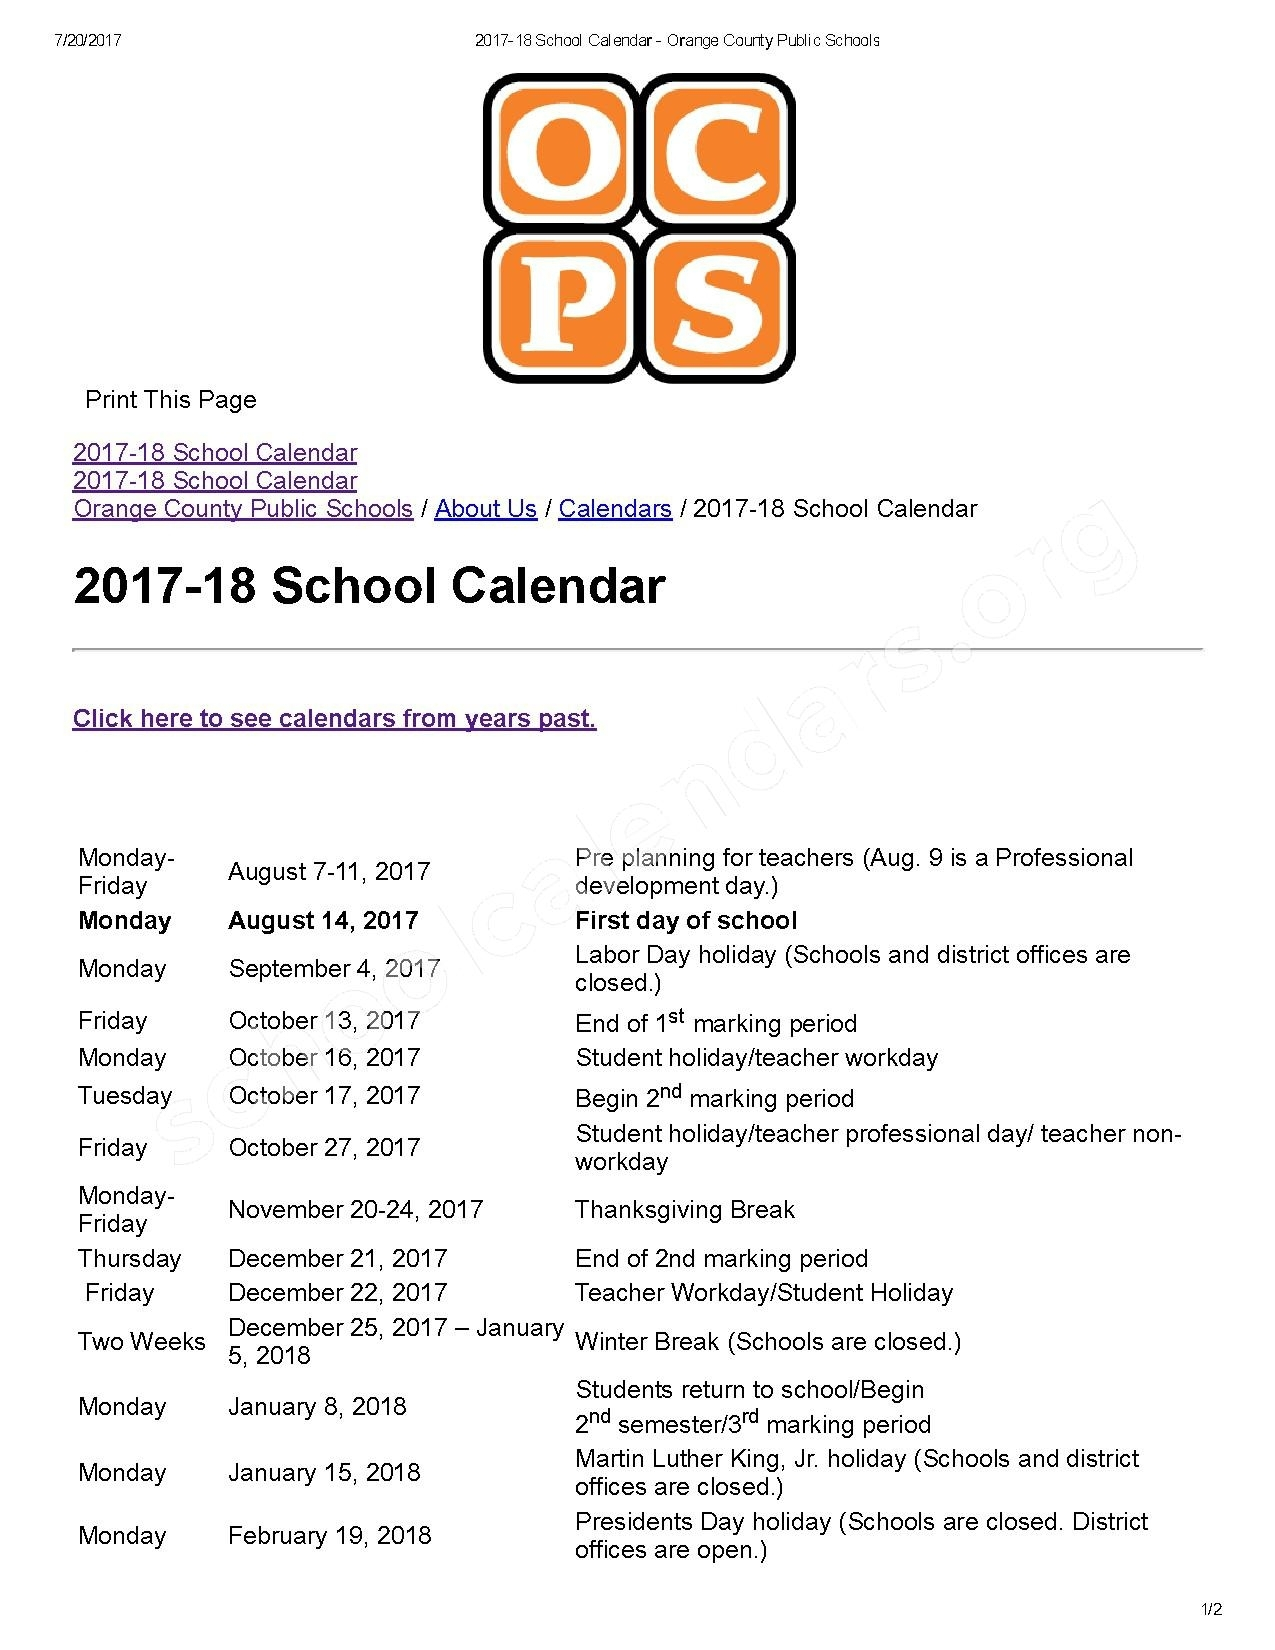 Orange County Public Schools Calendar 2023 - Schoolcalendars.net